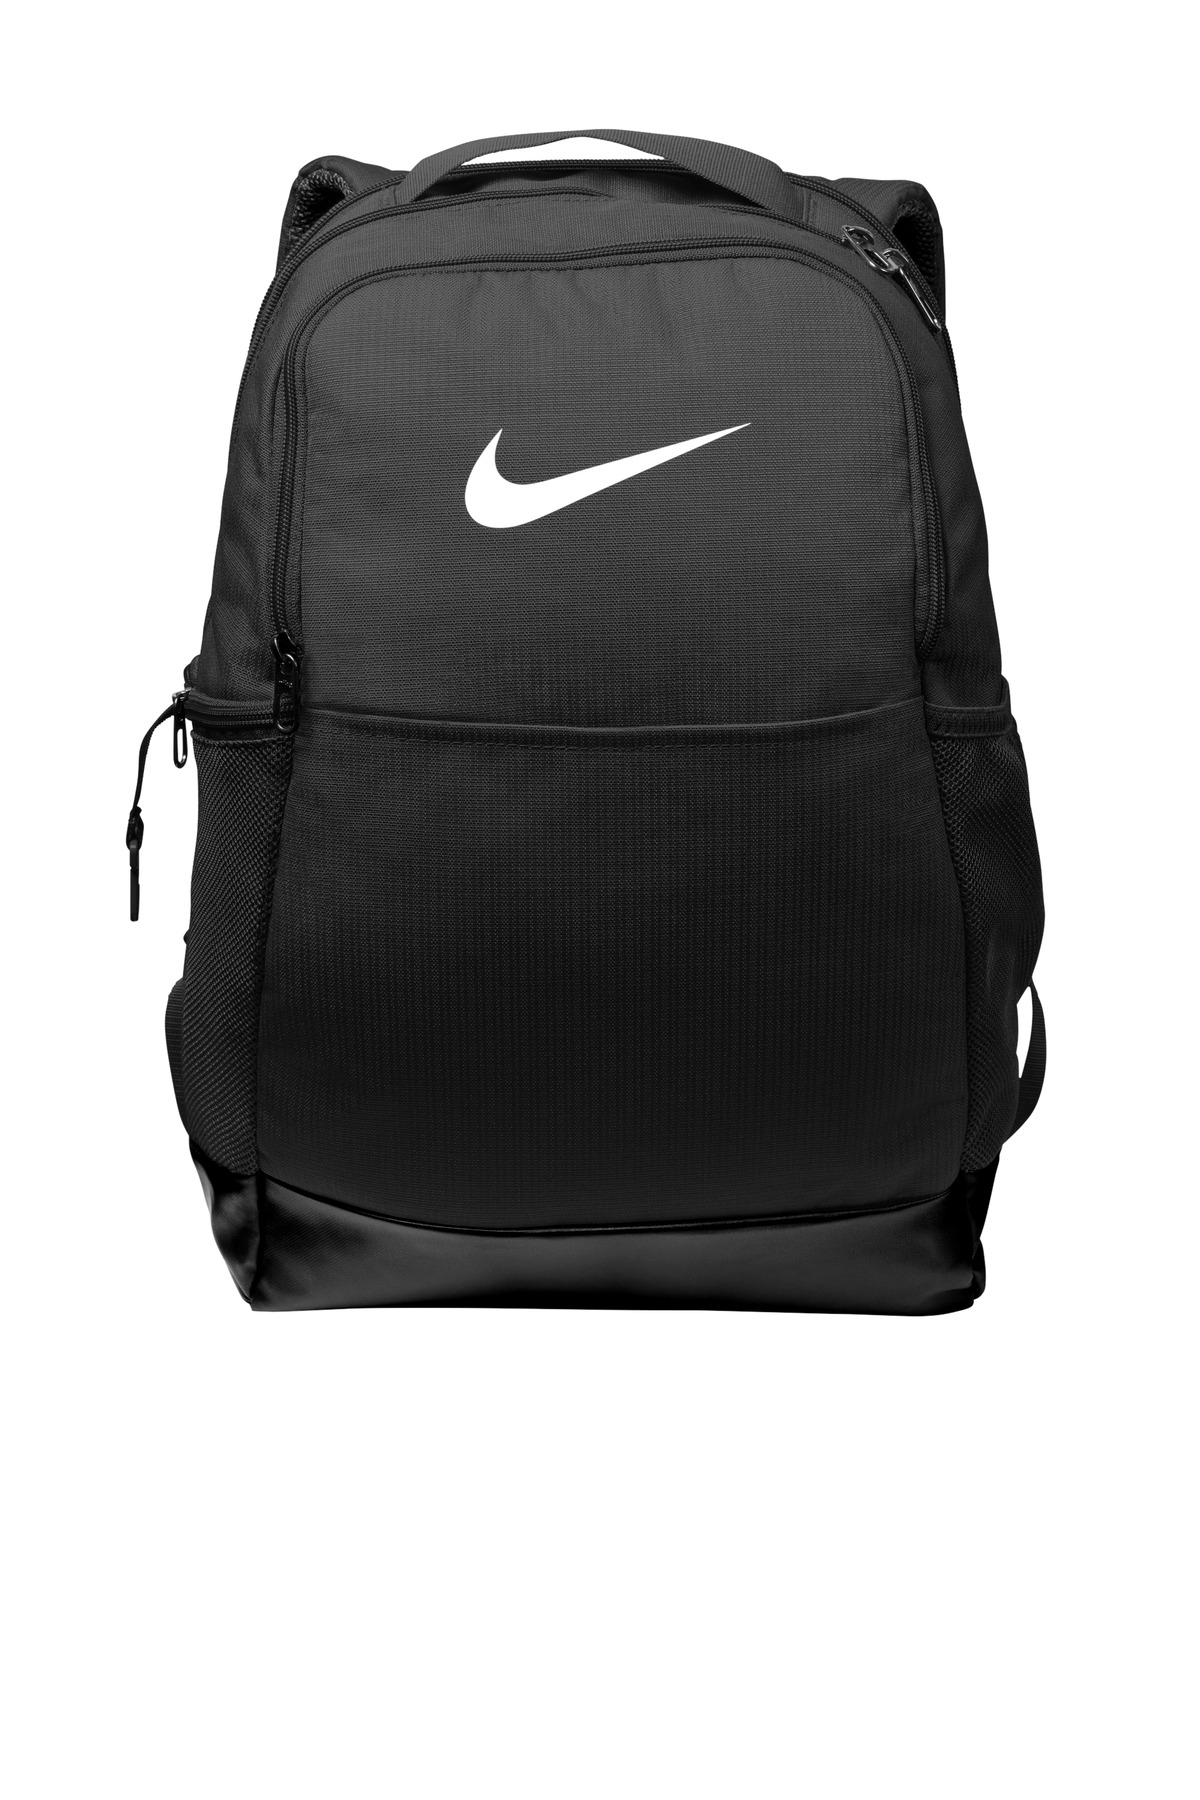 Nike Brasilia Medium Backpac-Nike